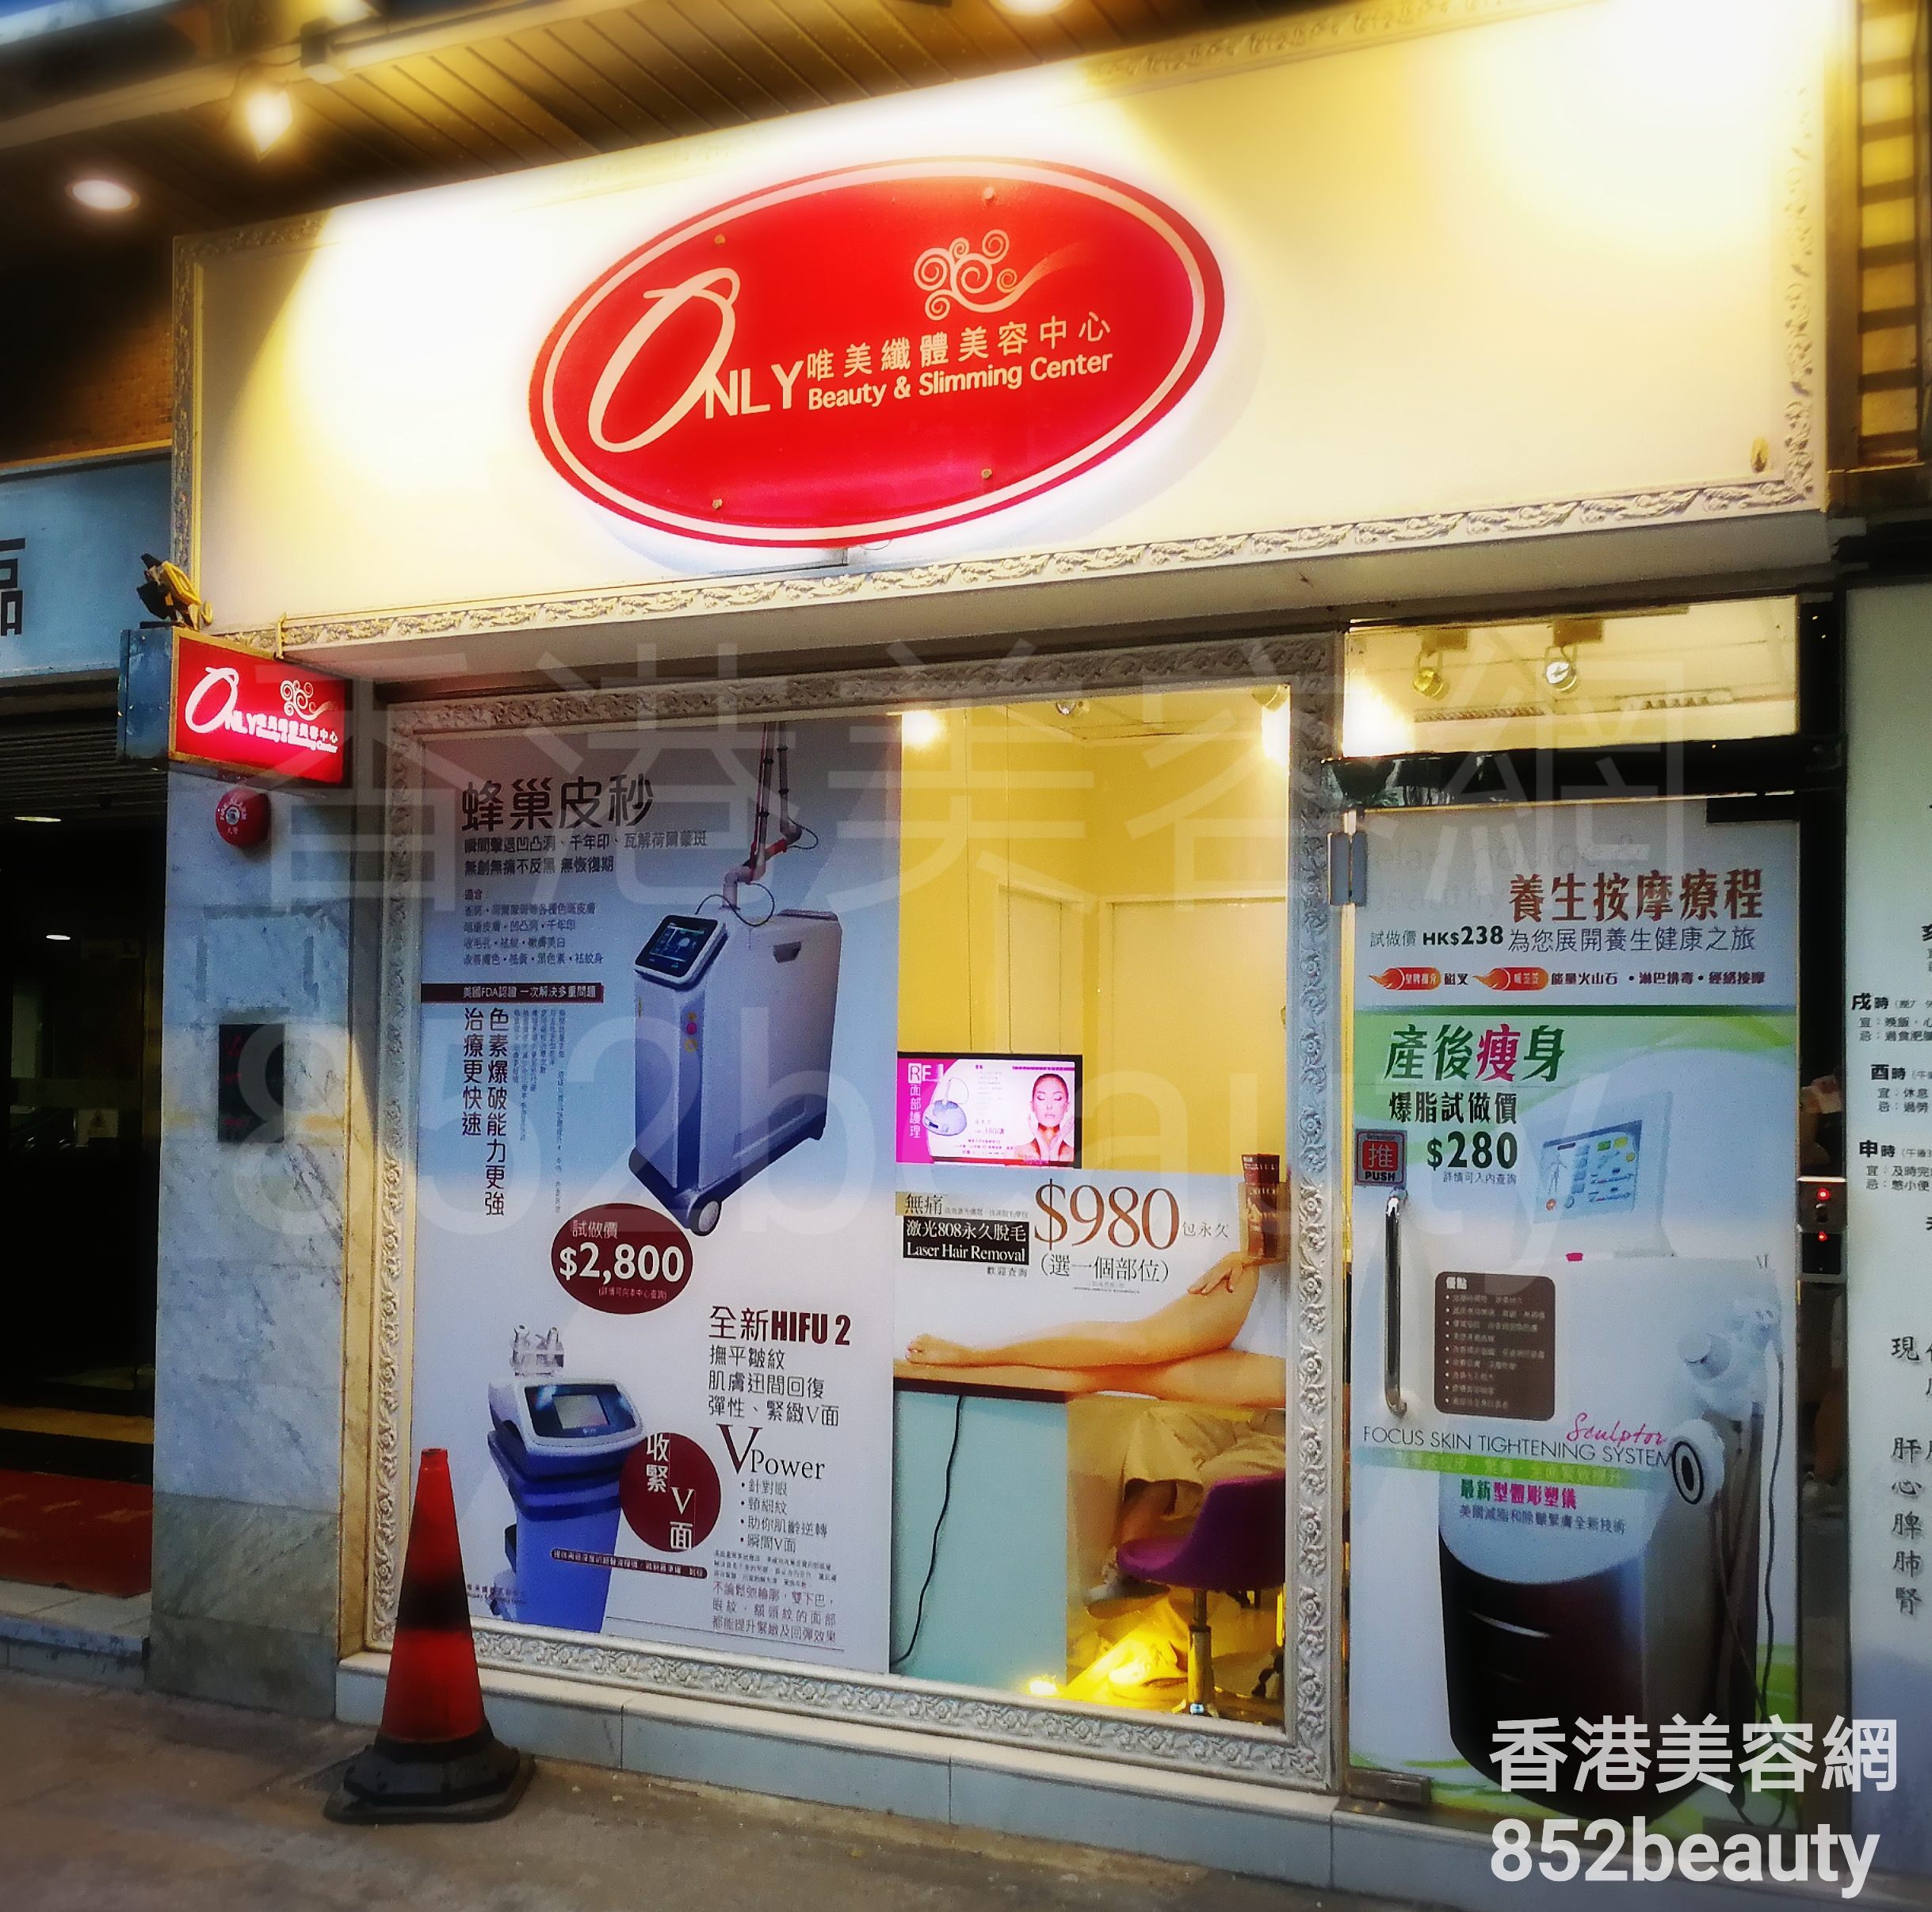 香港美容網 Hong Kong Beauty Salon 美容院 / 美容師: ONLY Beauty & Slimming Center 唯美纖體美容中心